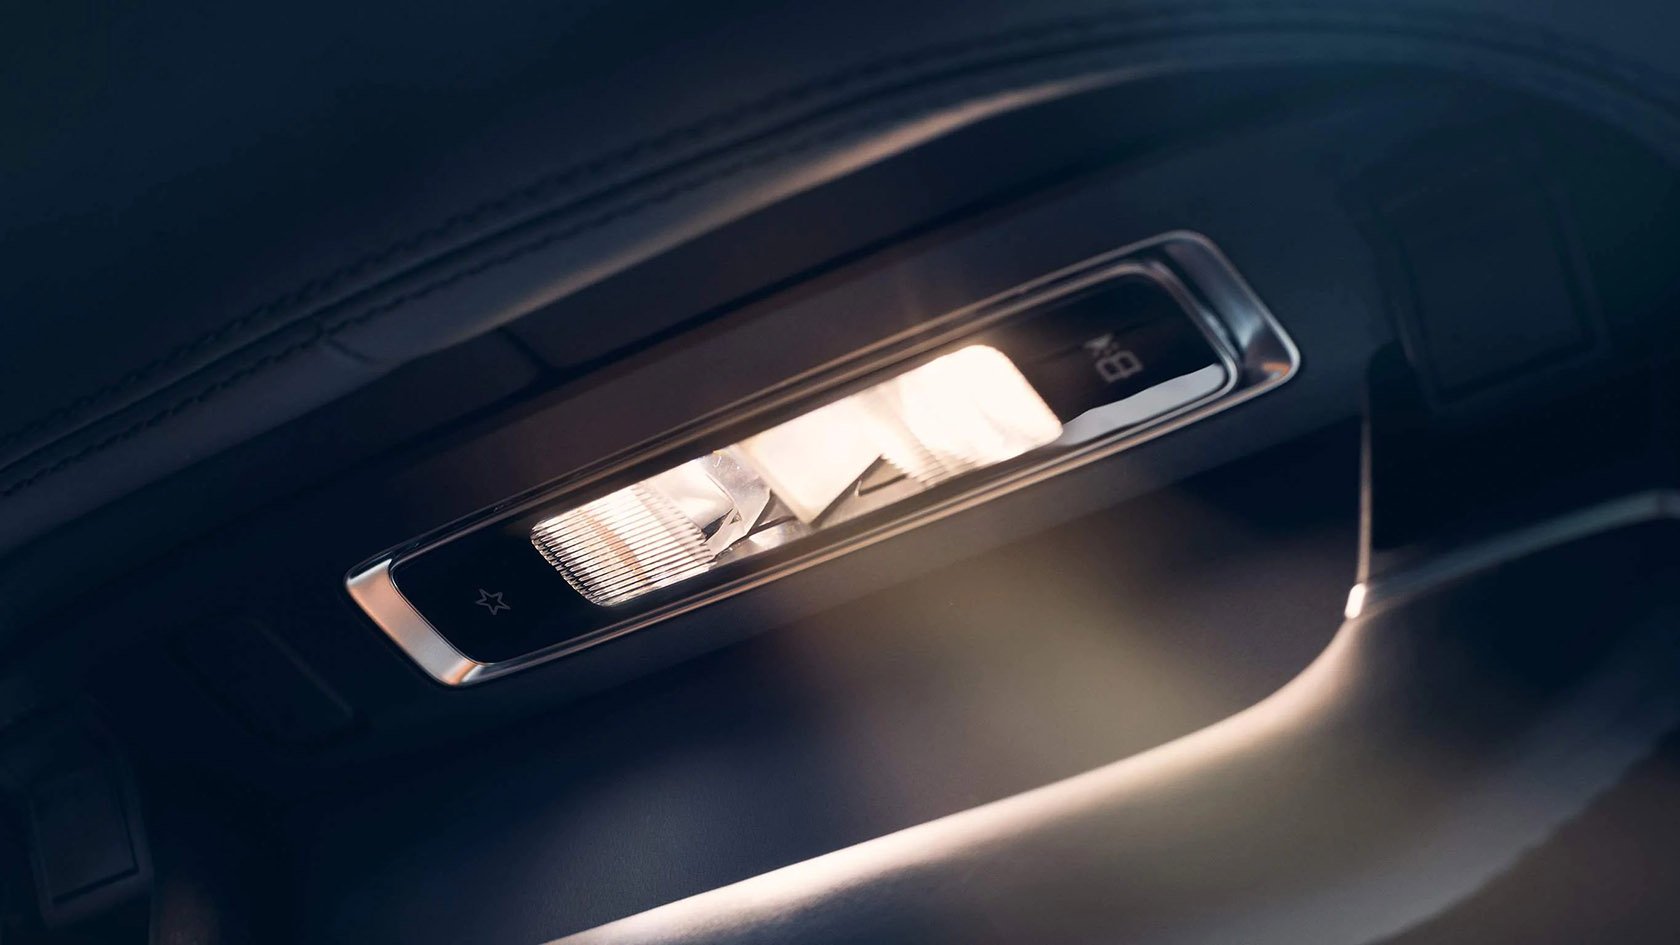 Комфорт Mercedes Maybach S-class Седан Главные особенности комфорта салона #3